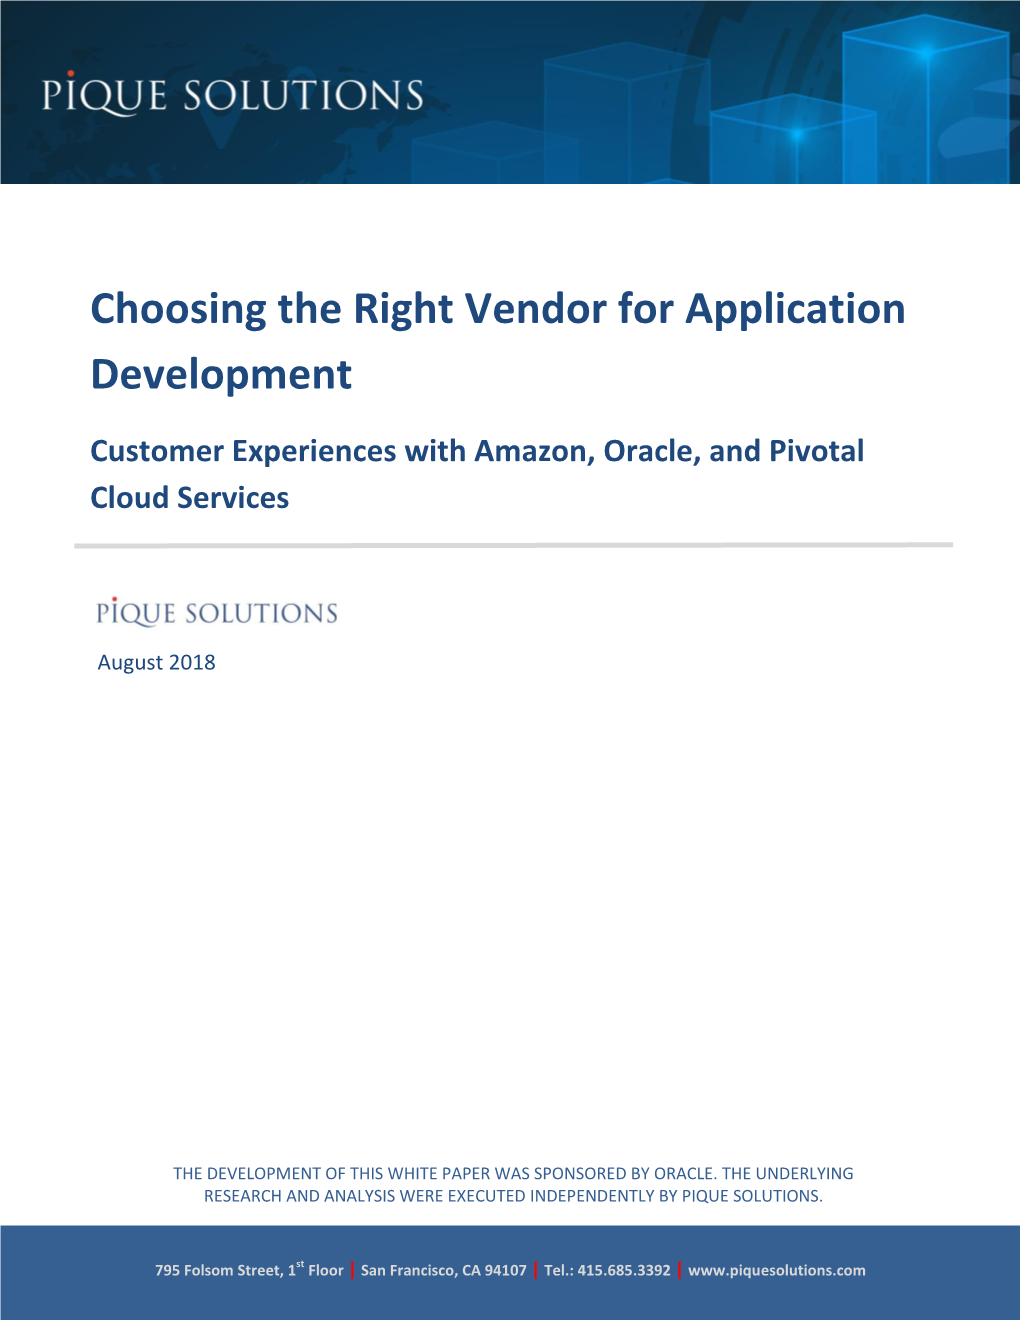 Choosing the Right Vendor for Application Development